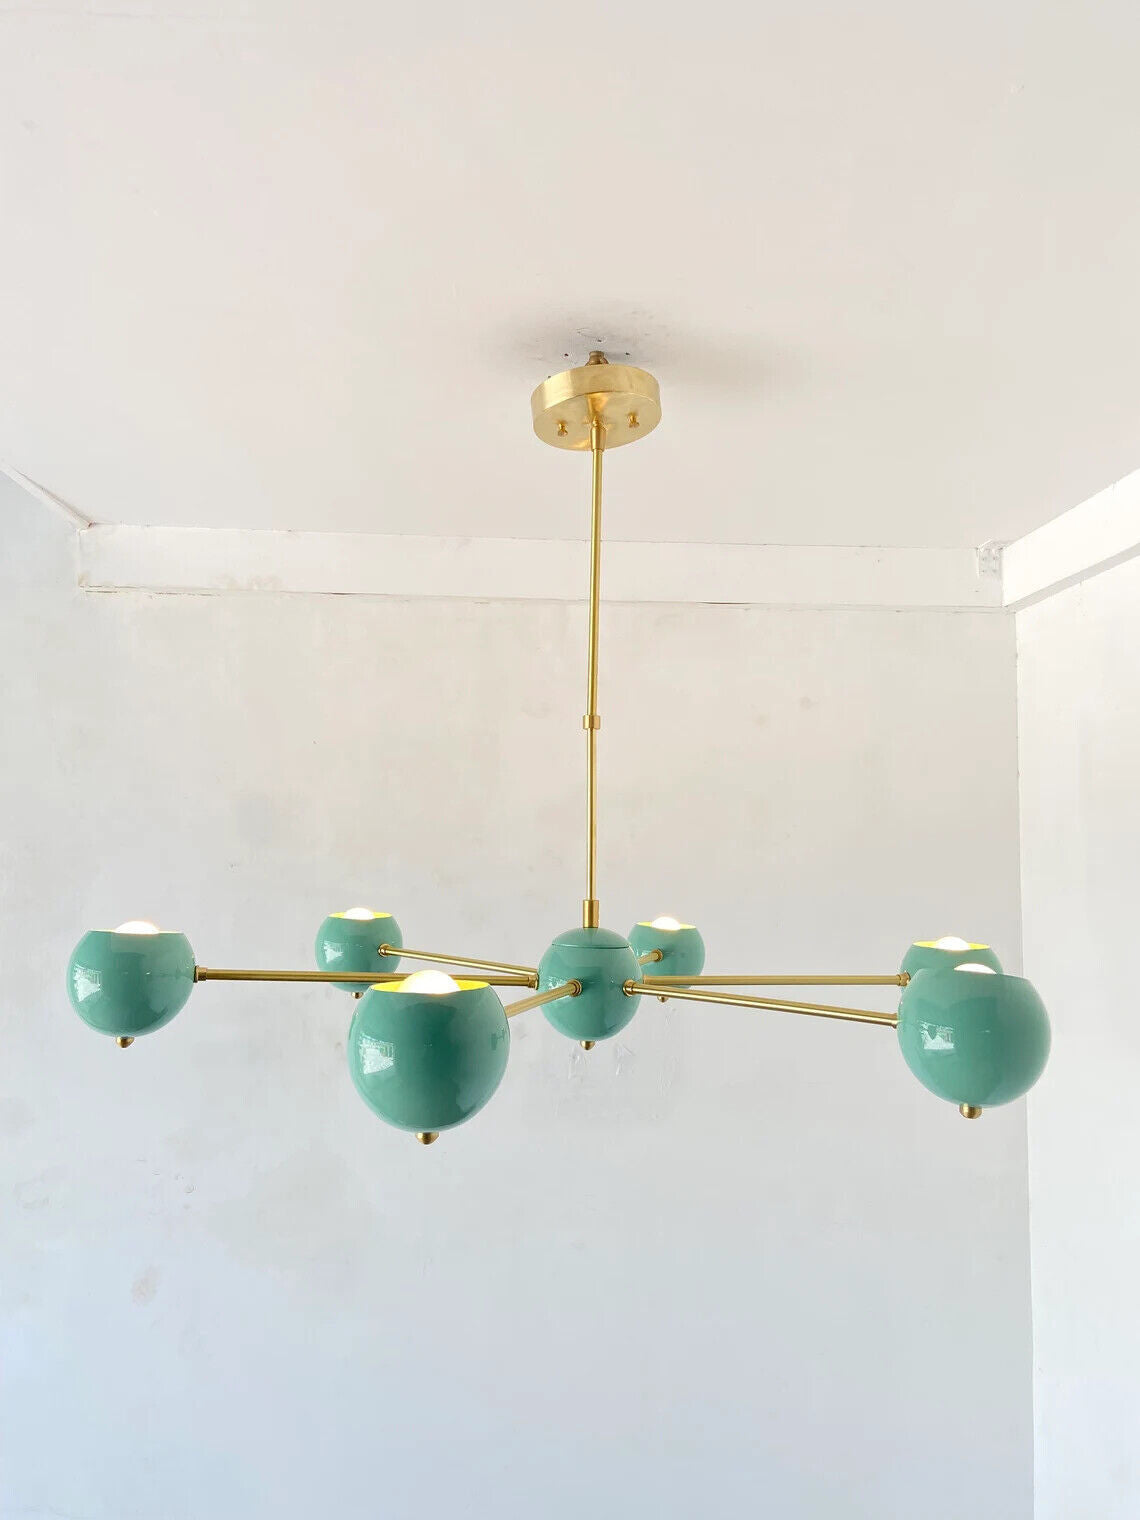 Chandelier Lighting - 6 light Colored Hanging Light - Mid Century Modern - Indus